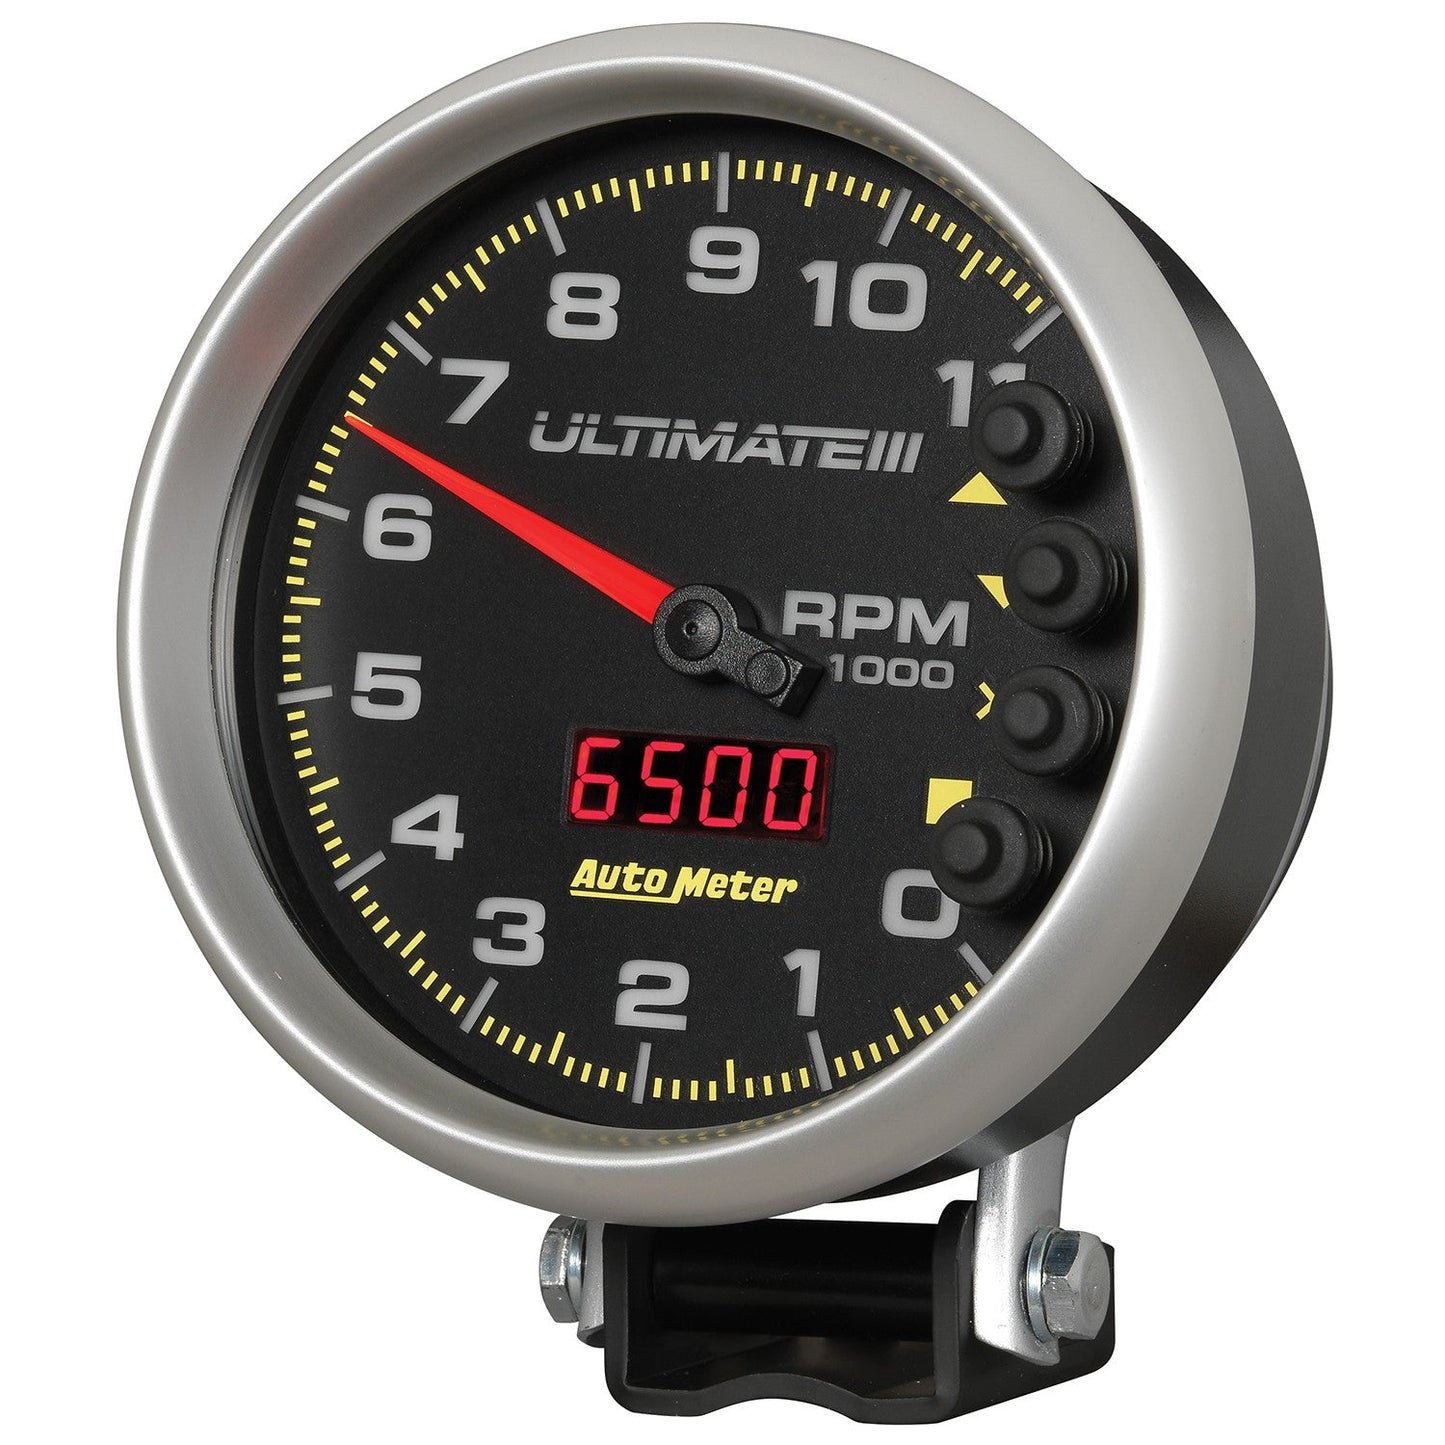 AutoMeter - 5" TACHOMETER, 0-11,000 RPM, PEDESTAL, ULTIMATE III PLAYBACK, BLACK (6888)